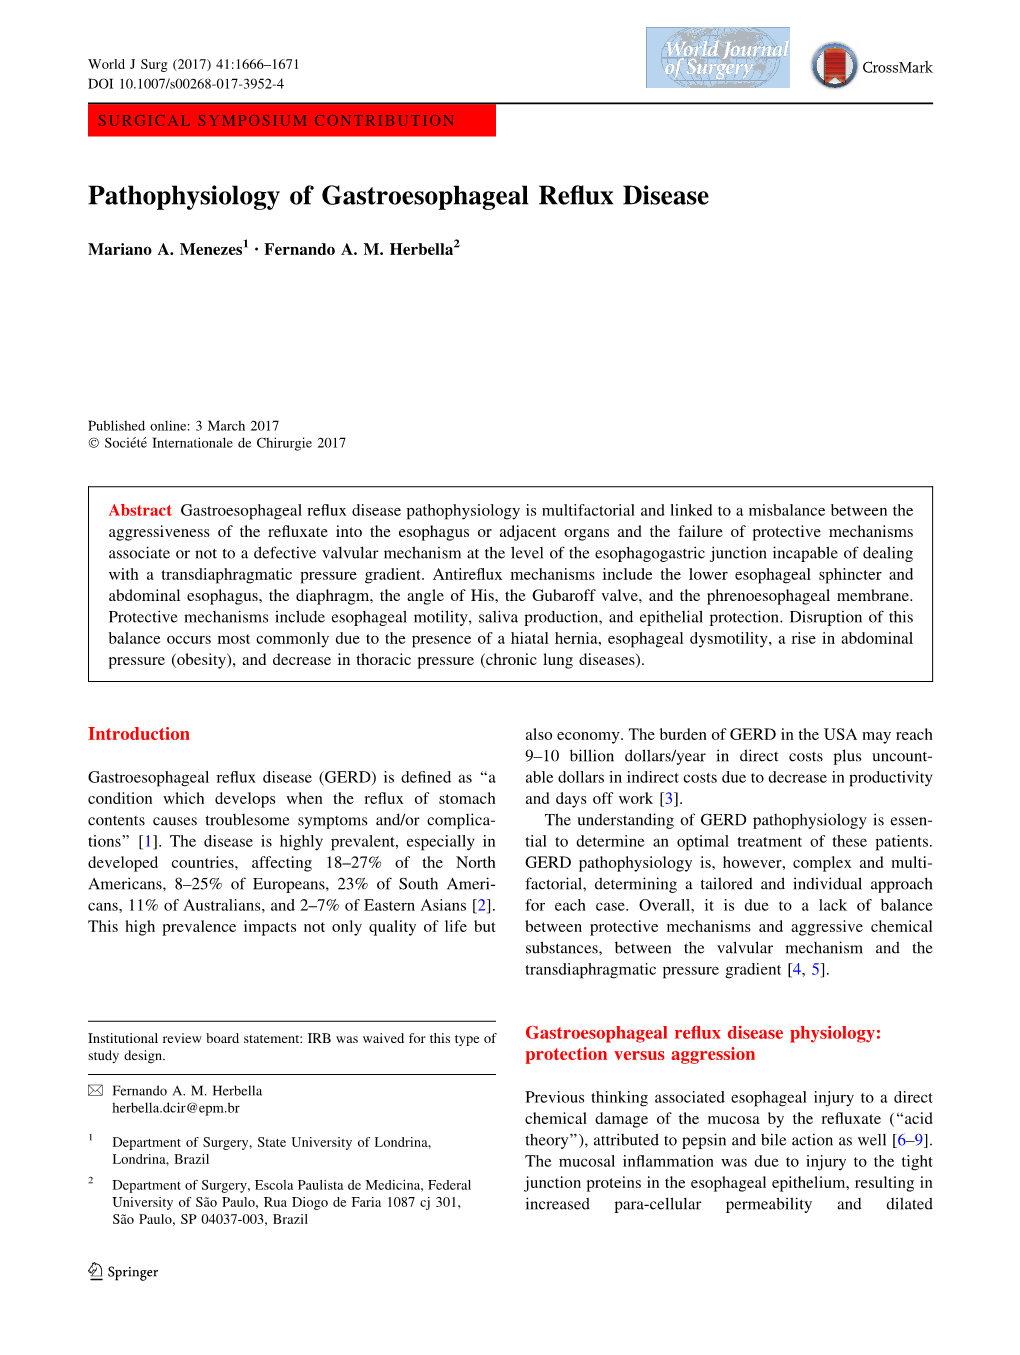 Pathophysiology of Gastroesophageal Reflux Disease